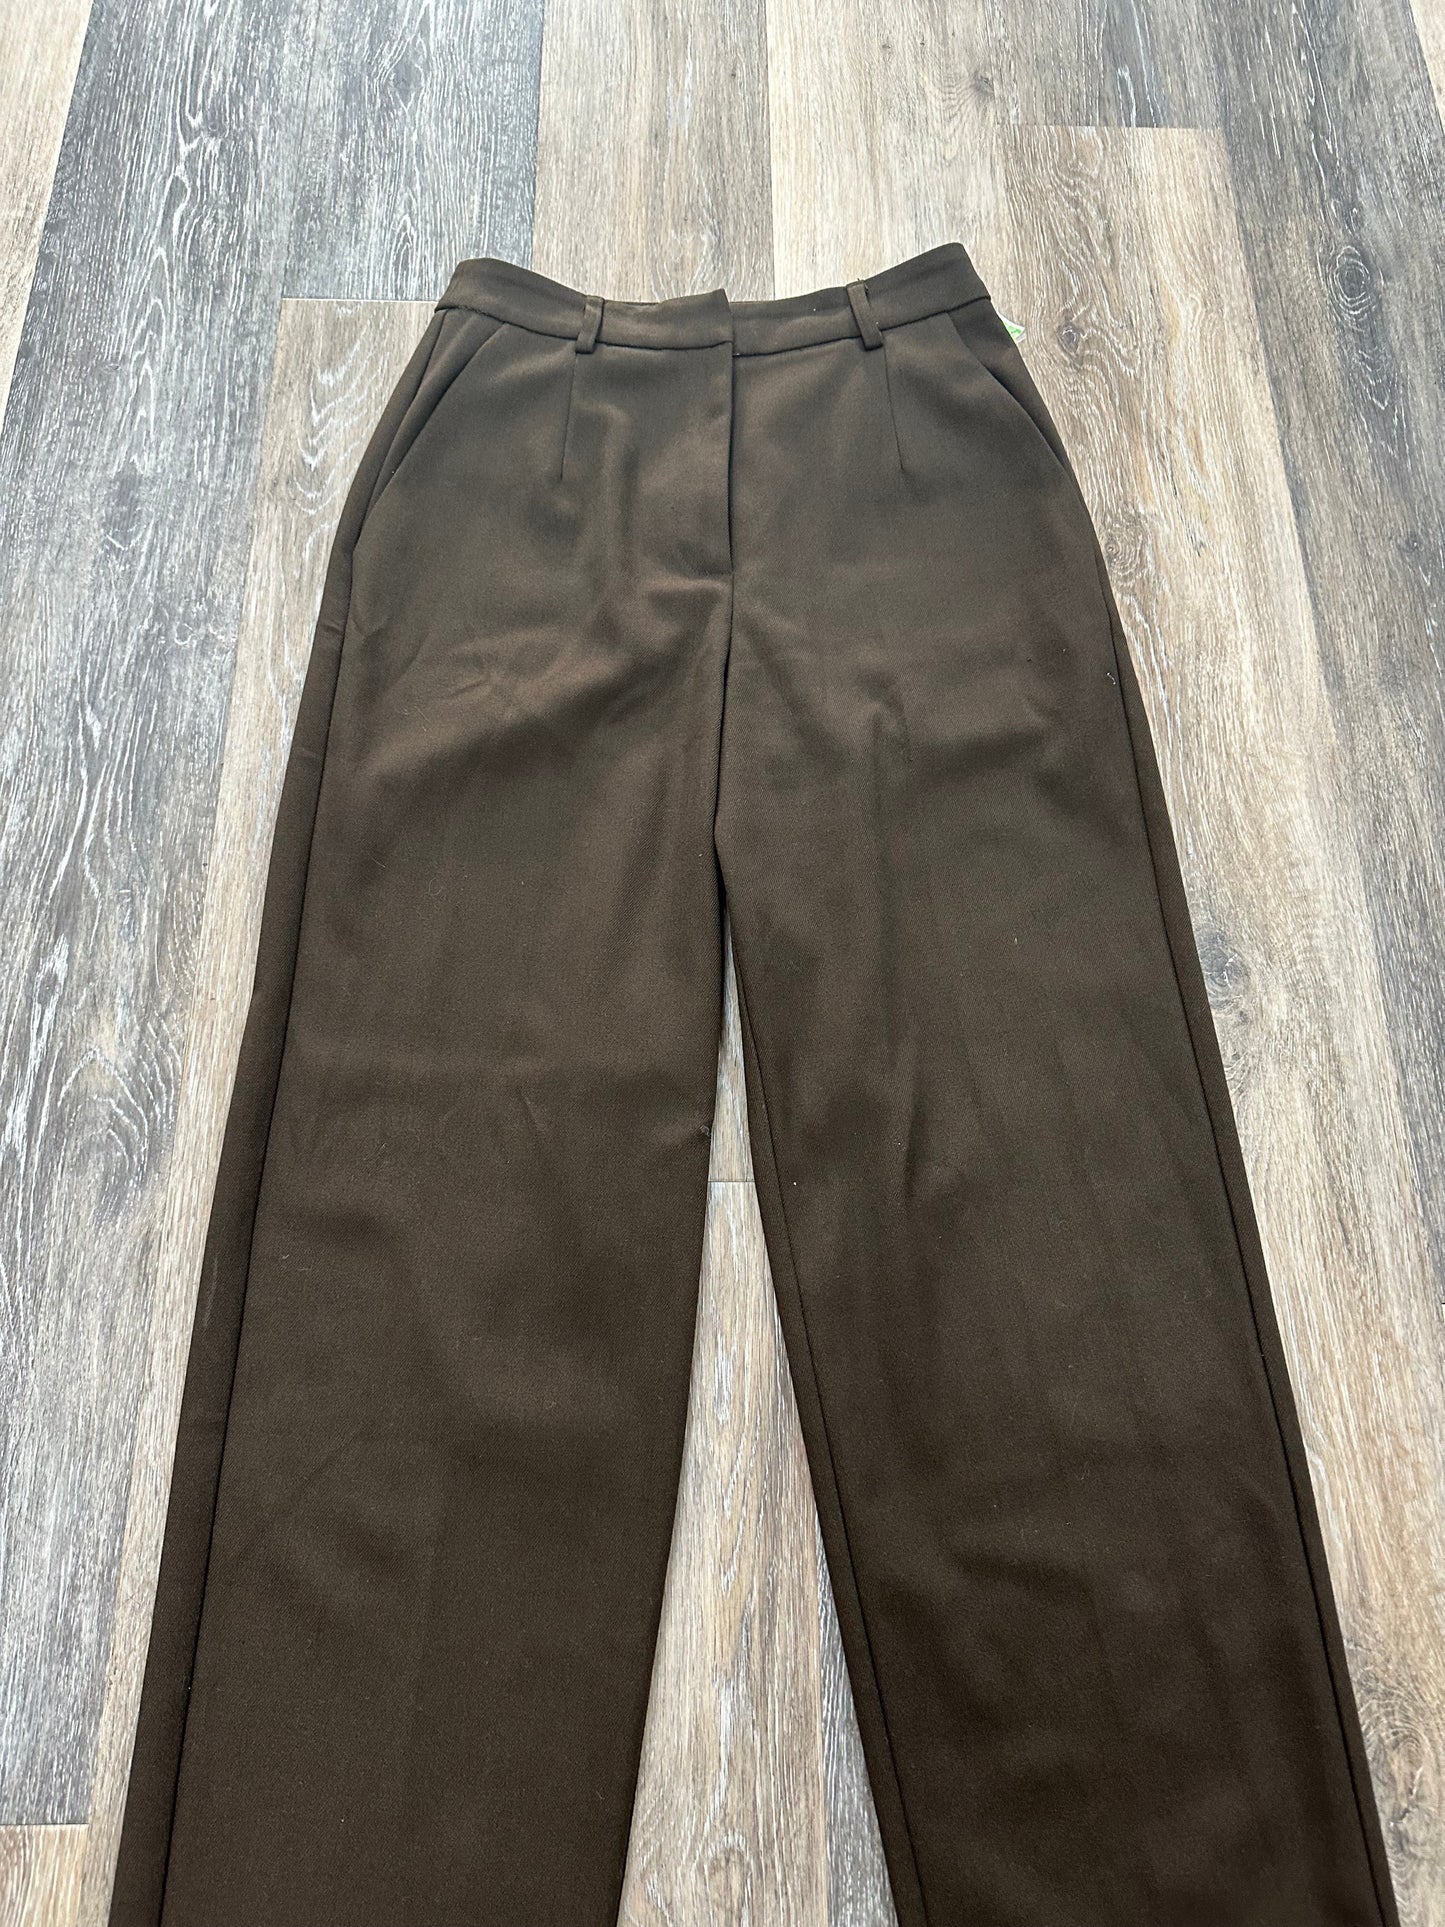 Pants Work/dress By Forcast  Size: 1